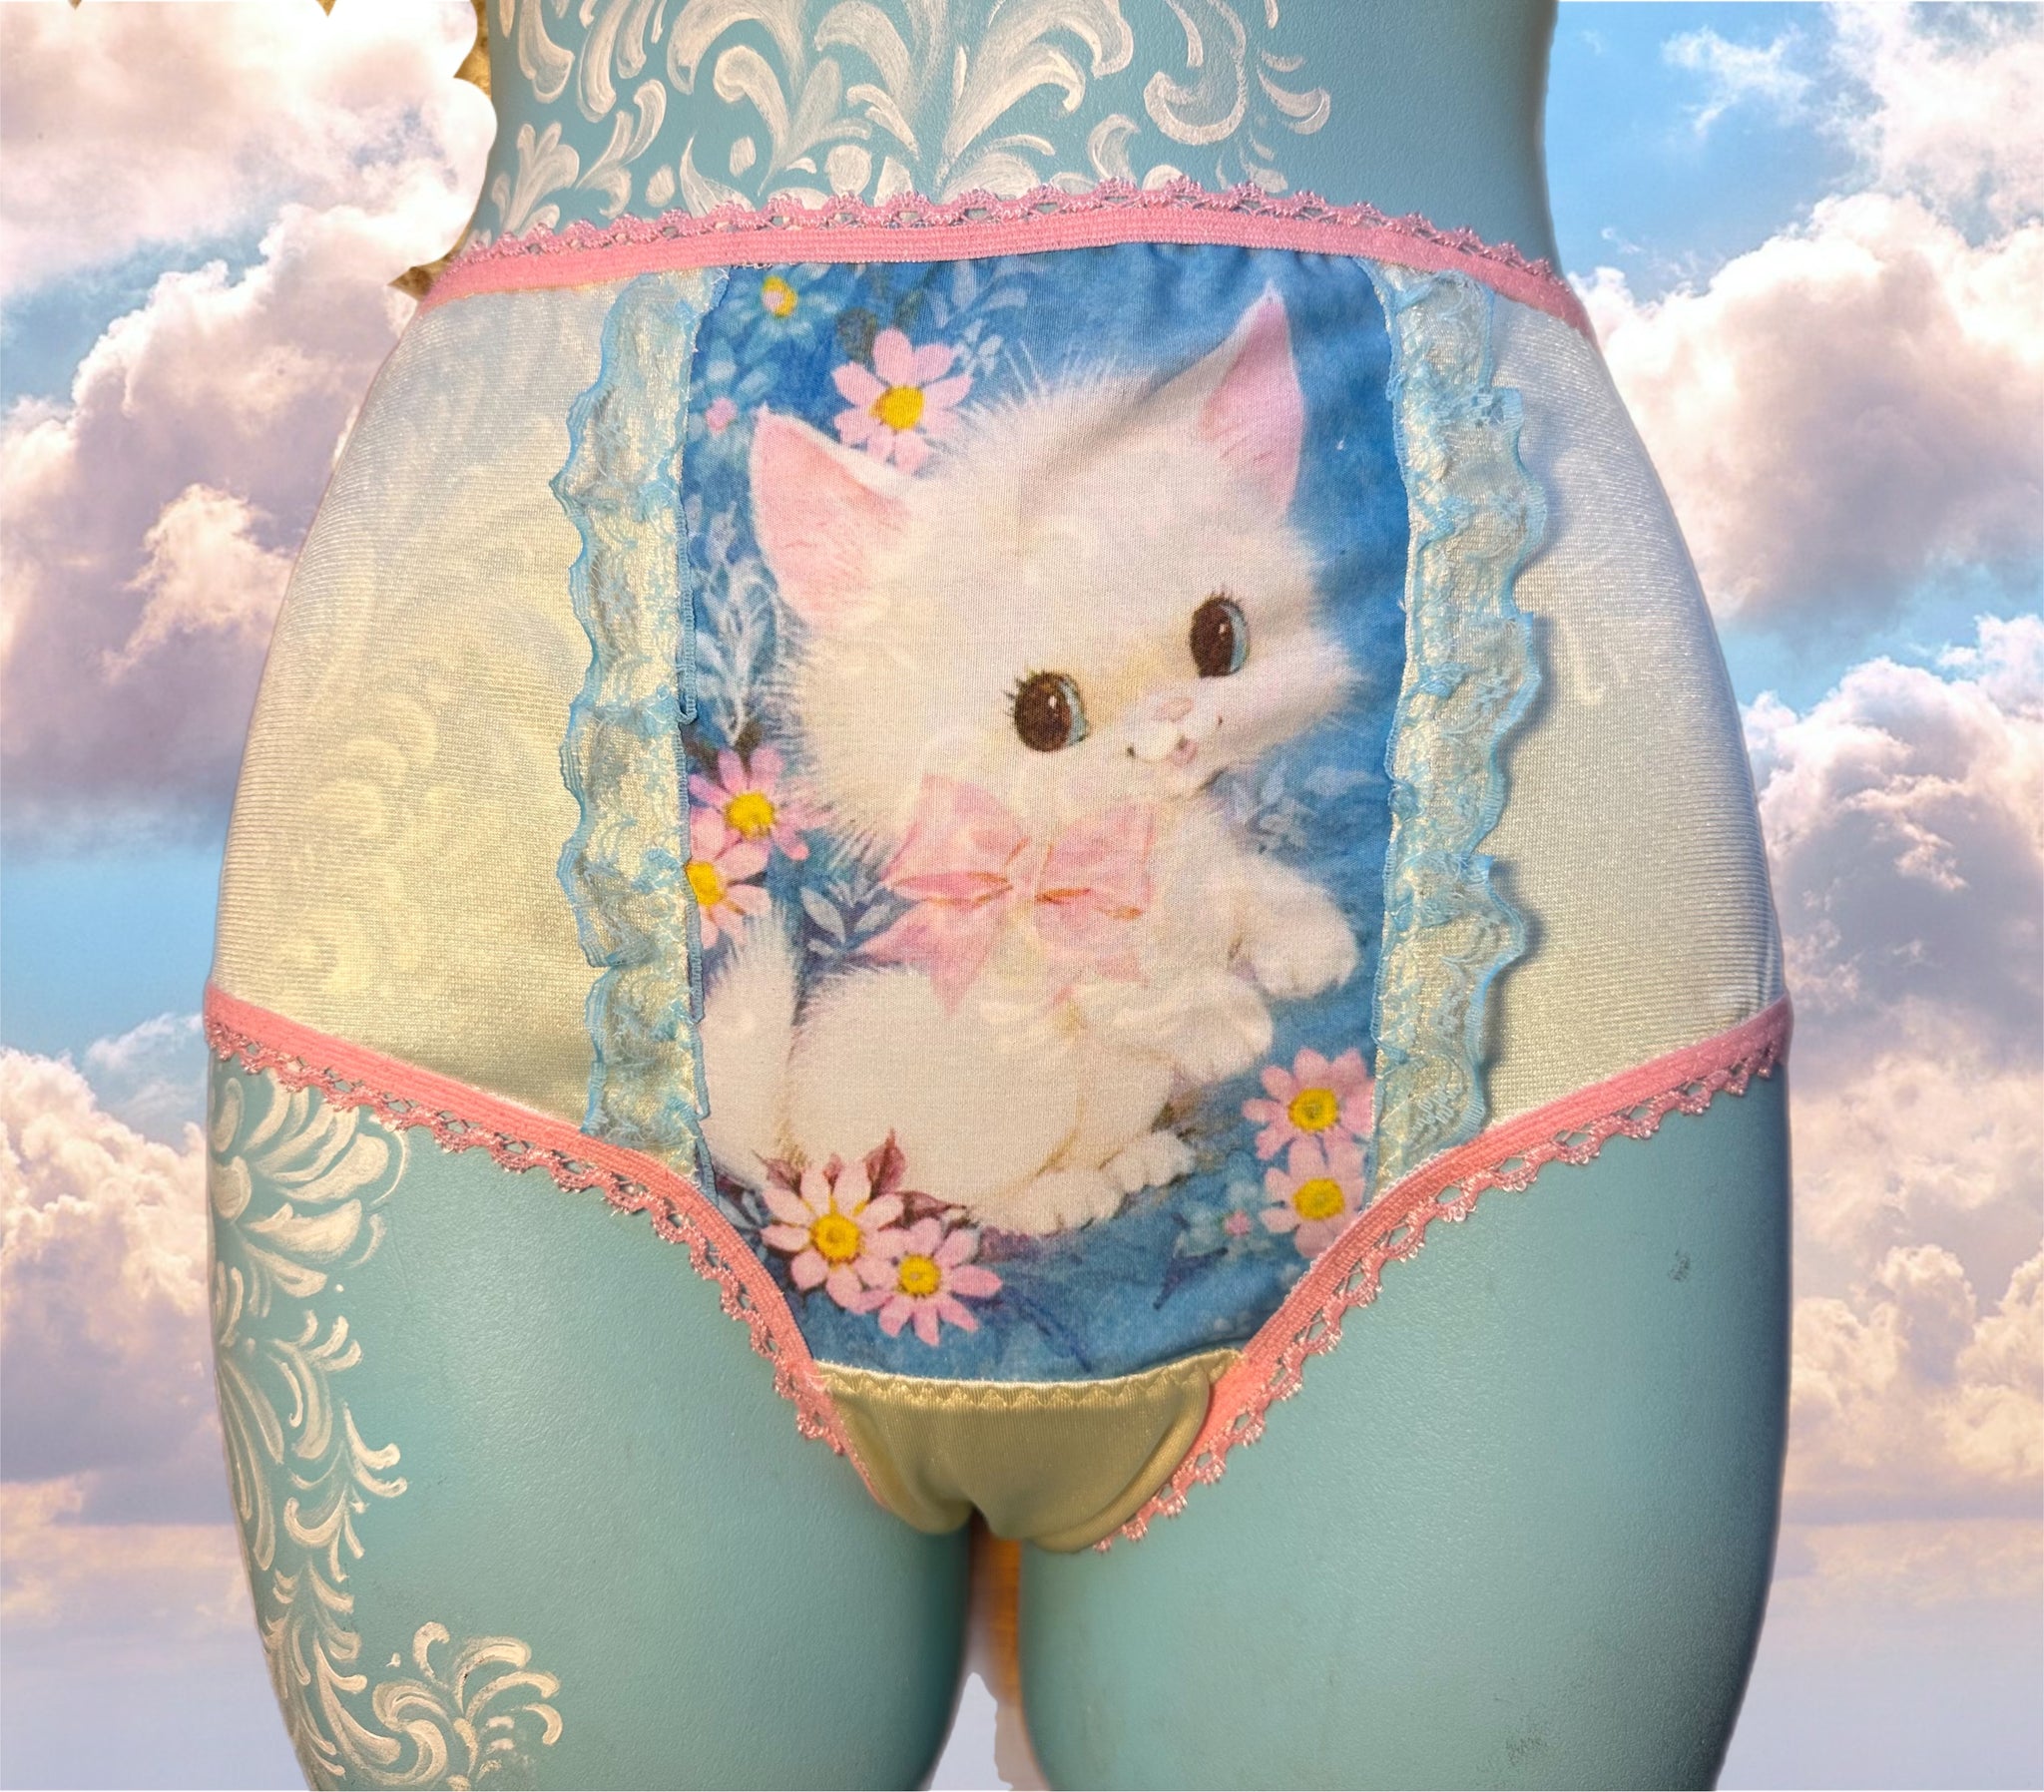 Kitty Cat Granny Panties high waisted